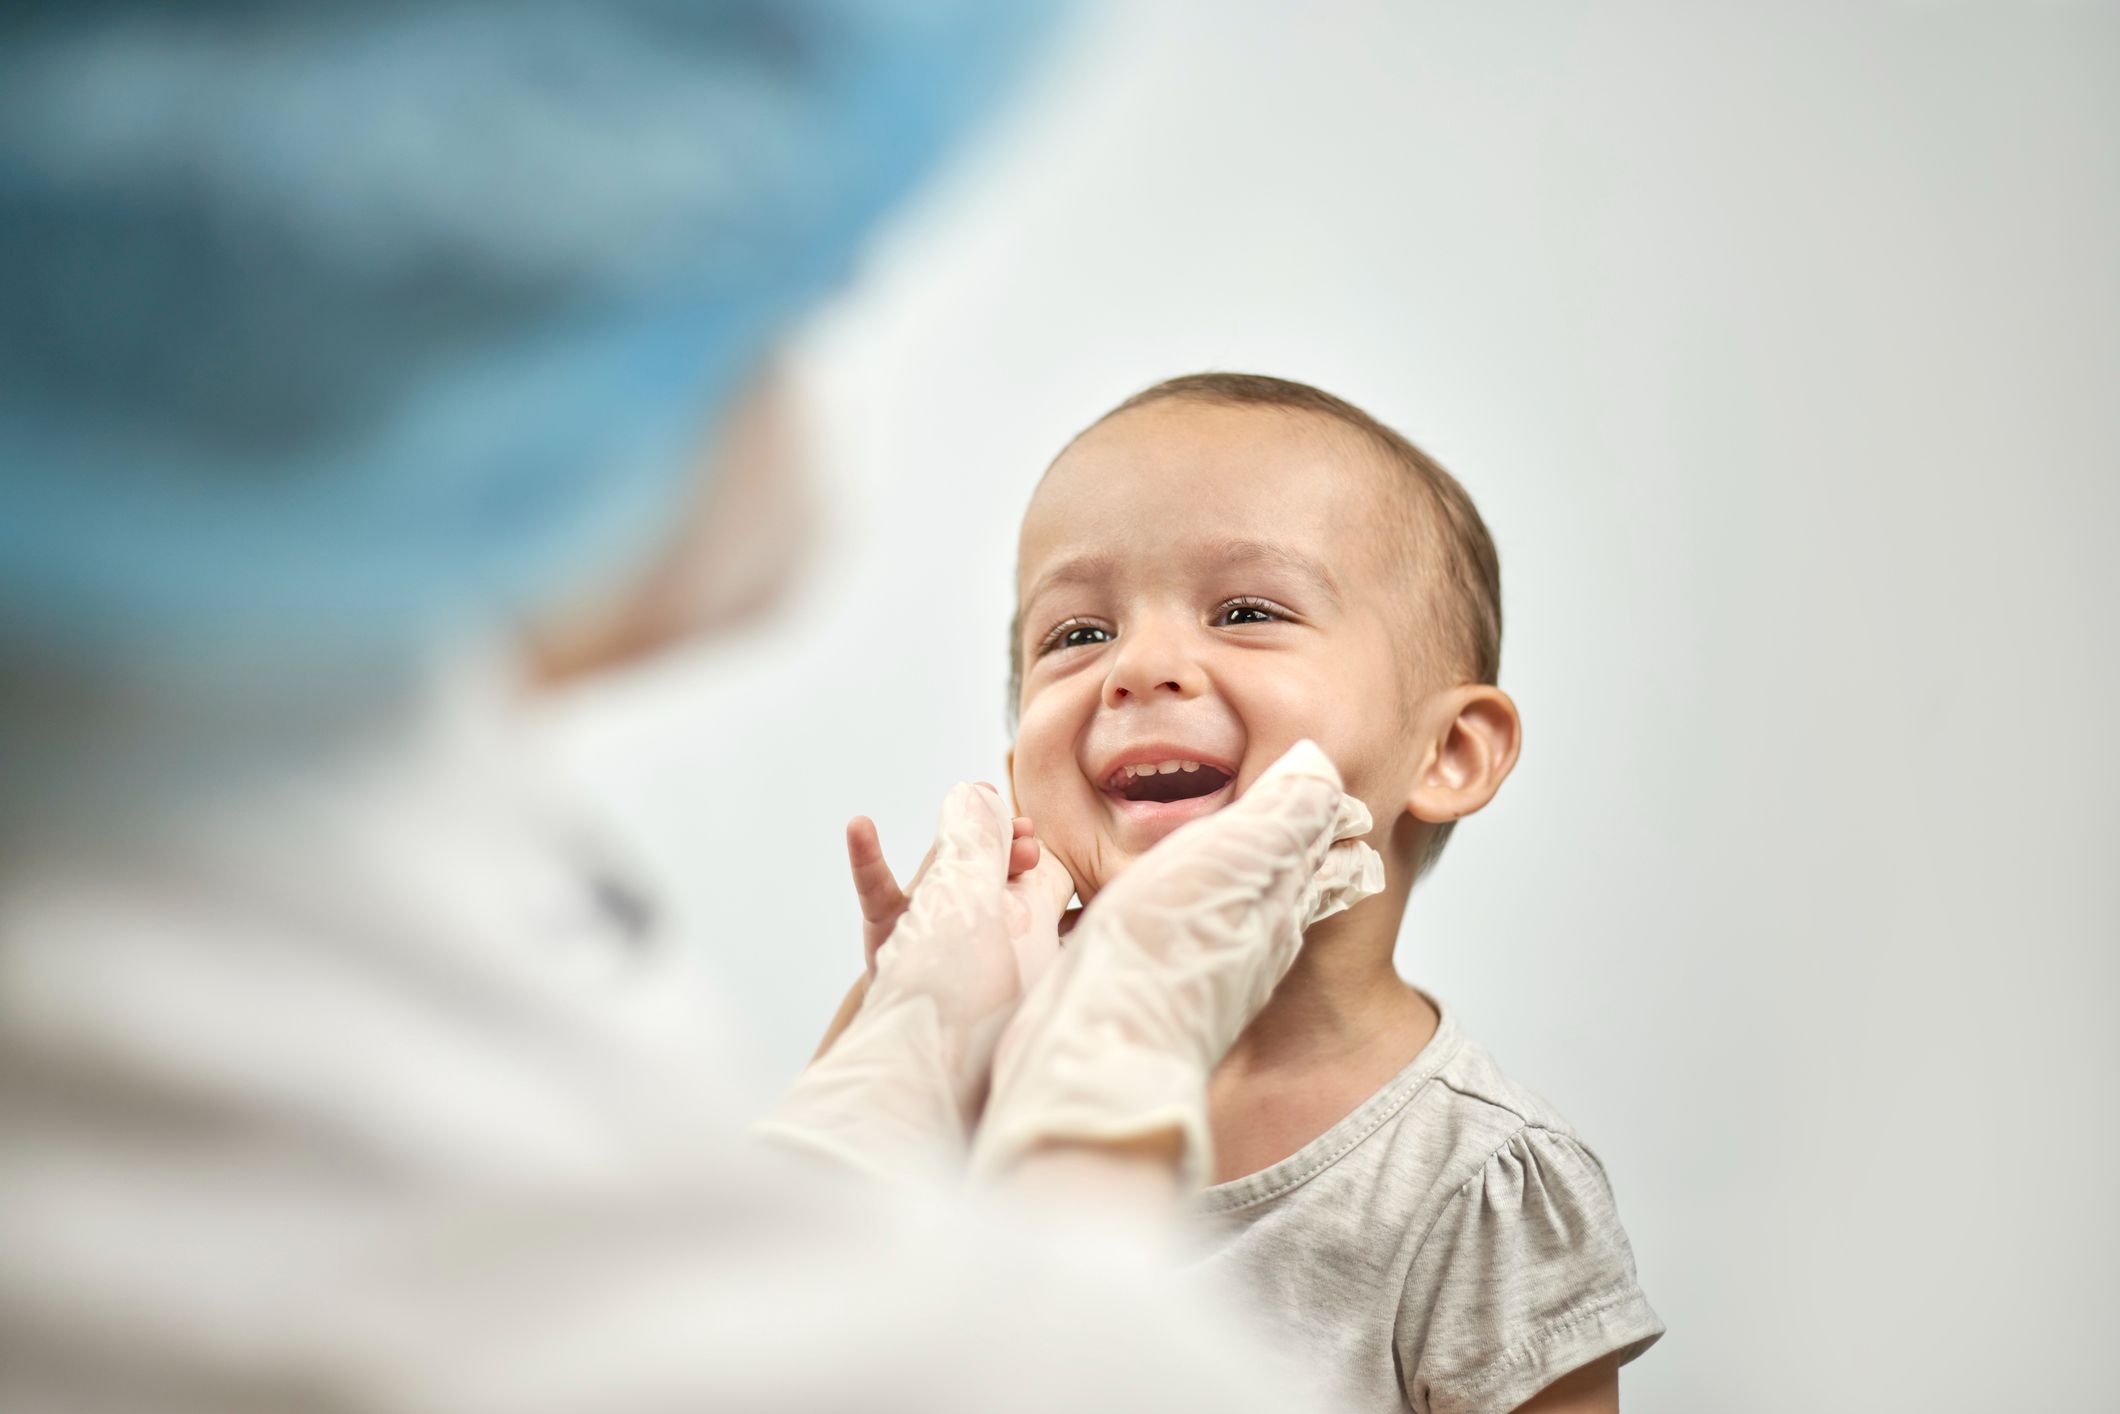 Pediatric Dentistry showing Dr. examining child's cheeks